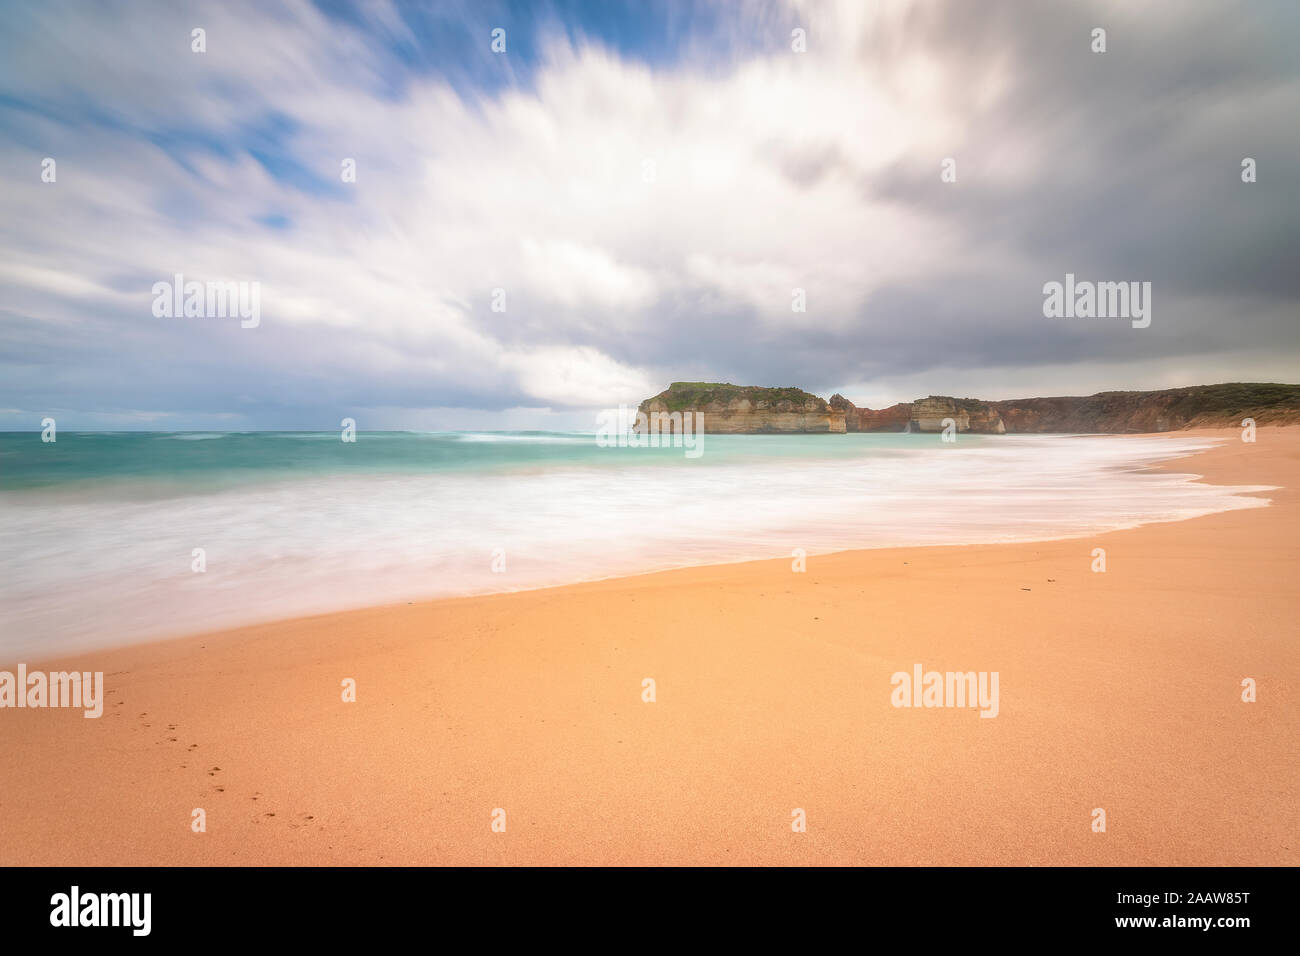 Scenic view of beach against cloudy sky at Twelve Apostles Marine National Park, Victoria, Australia Stock Photo